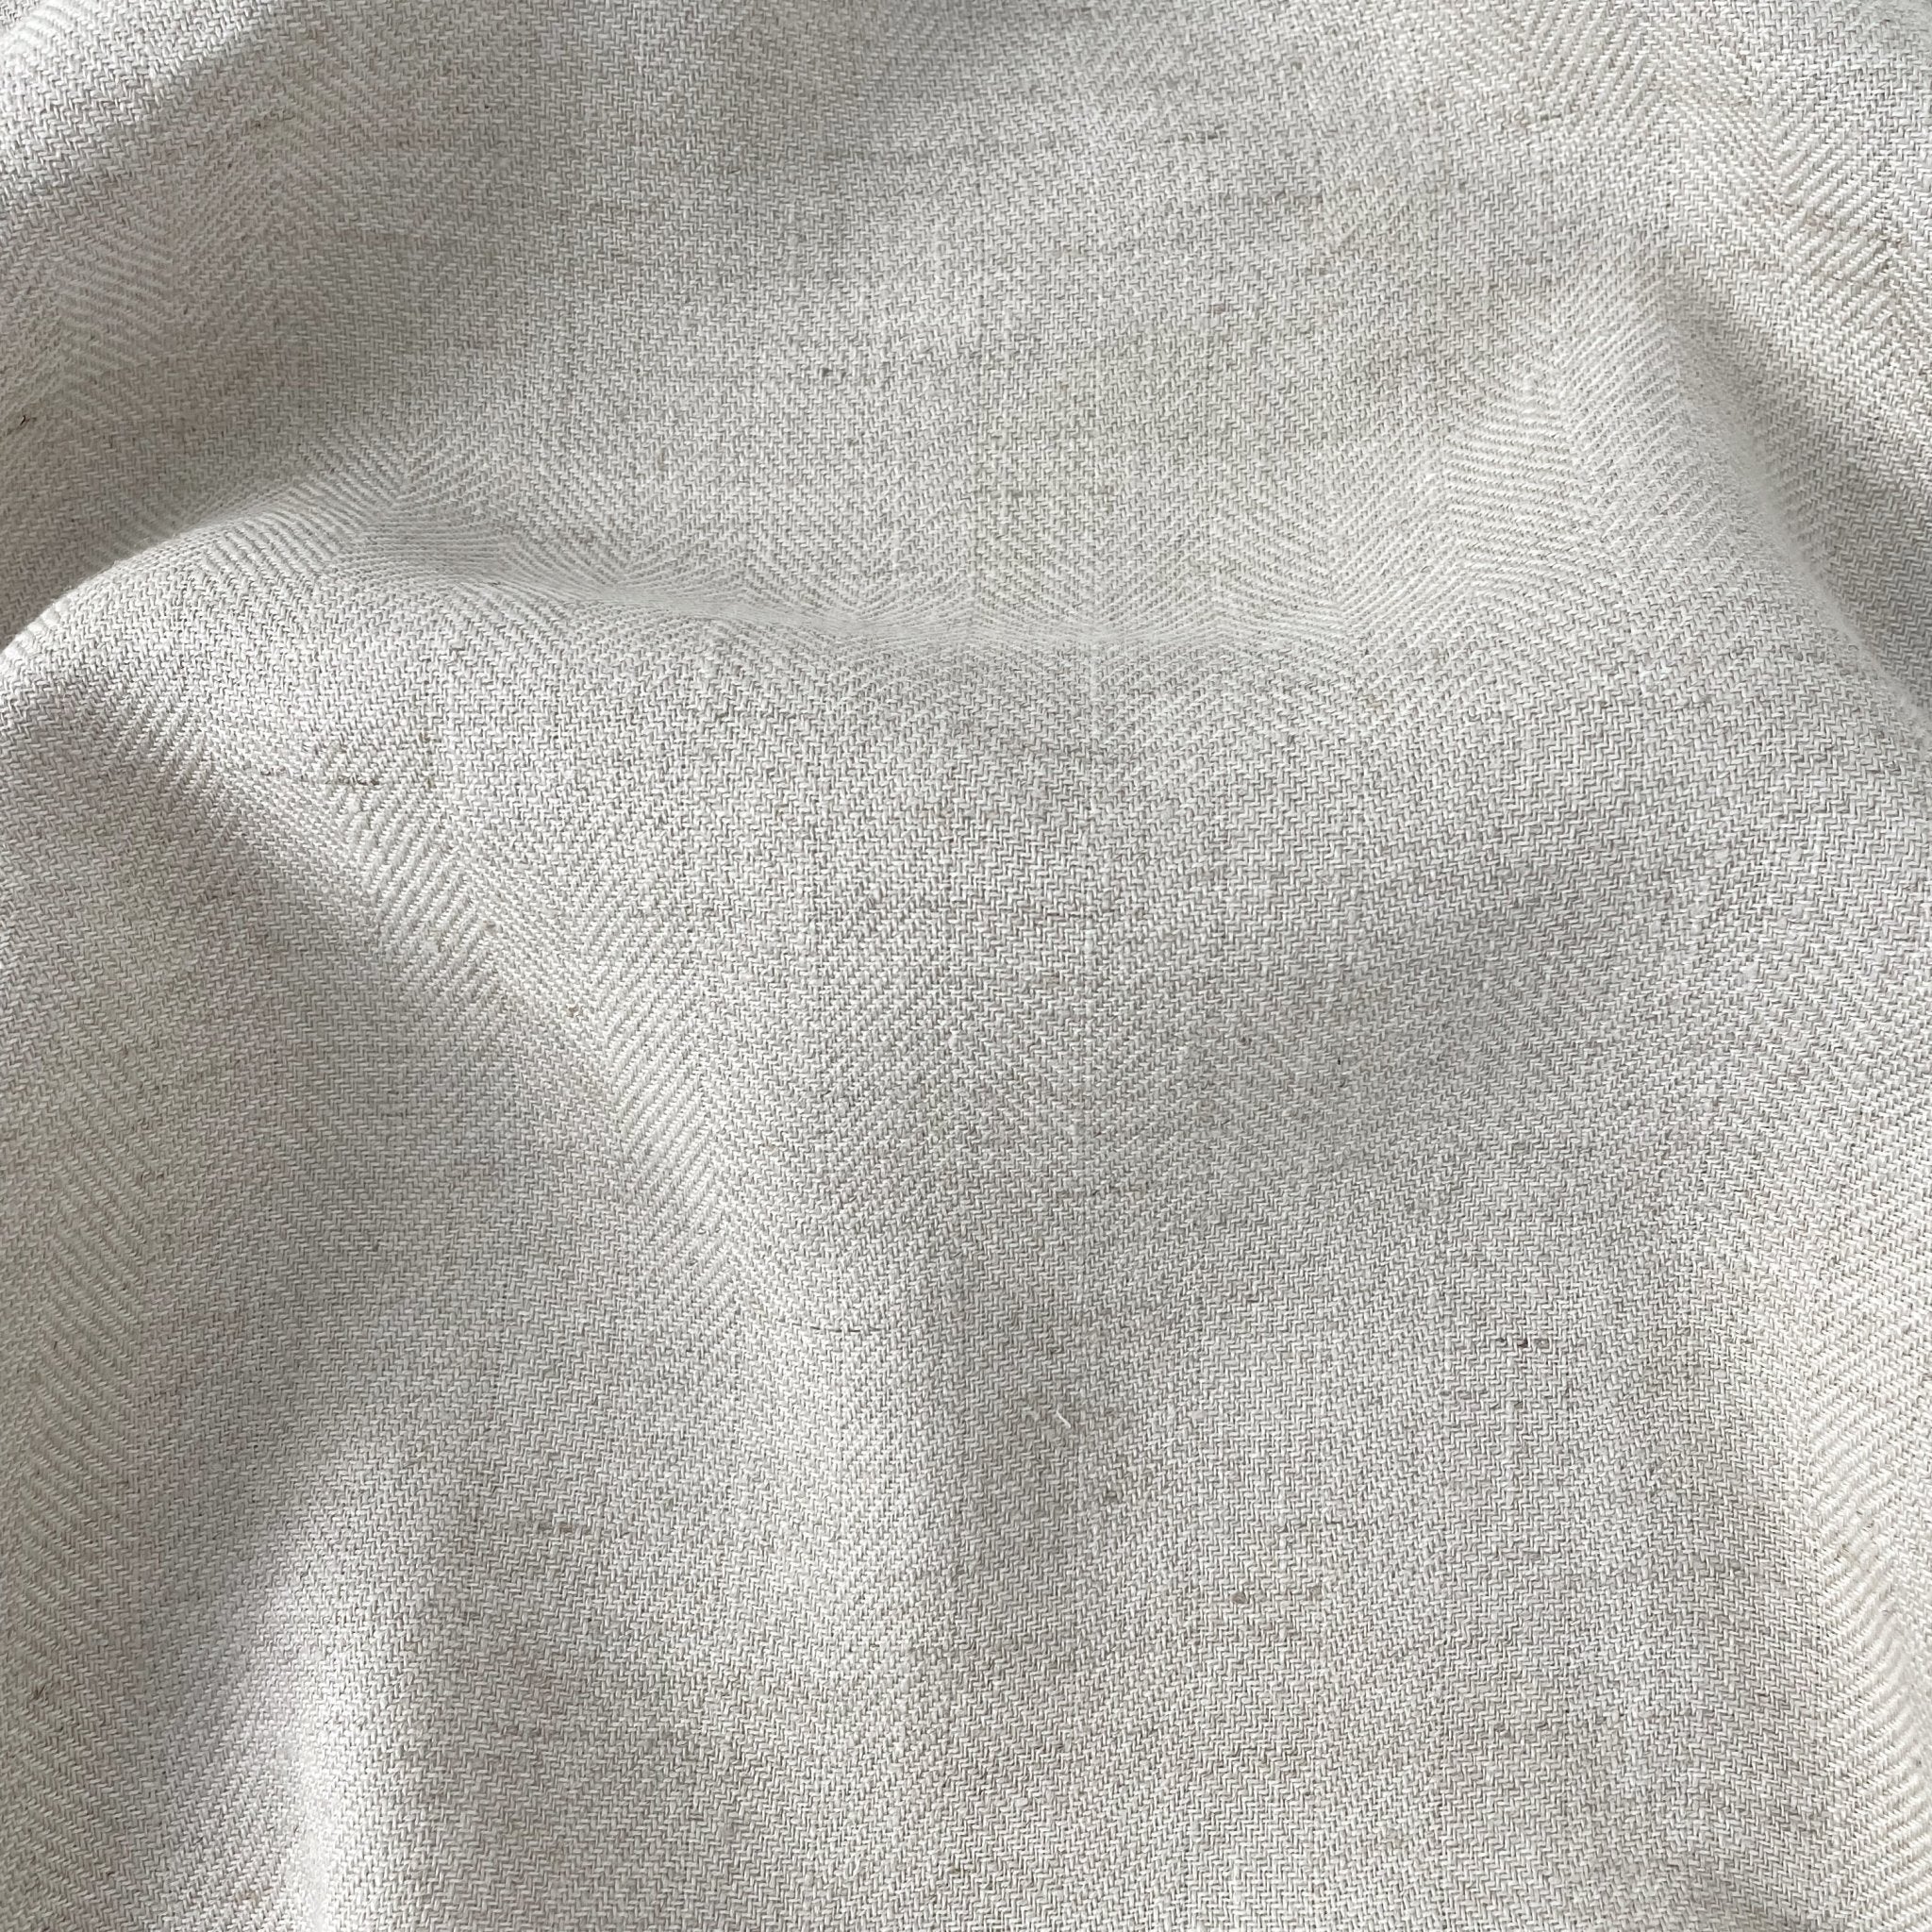 Linen Melange Fabric HBT Herringbone Twill (6667 6668) - The Linen Lab - Light Natural